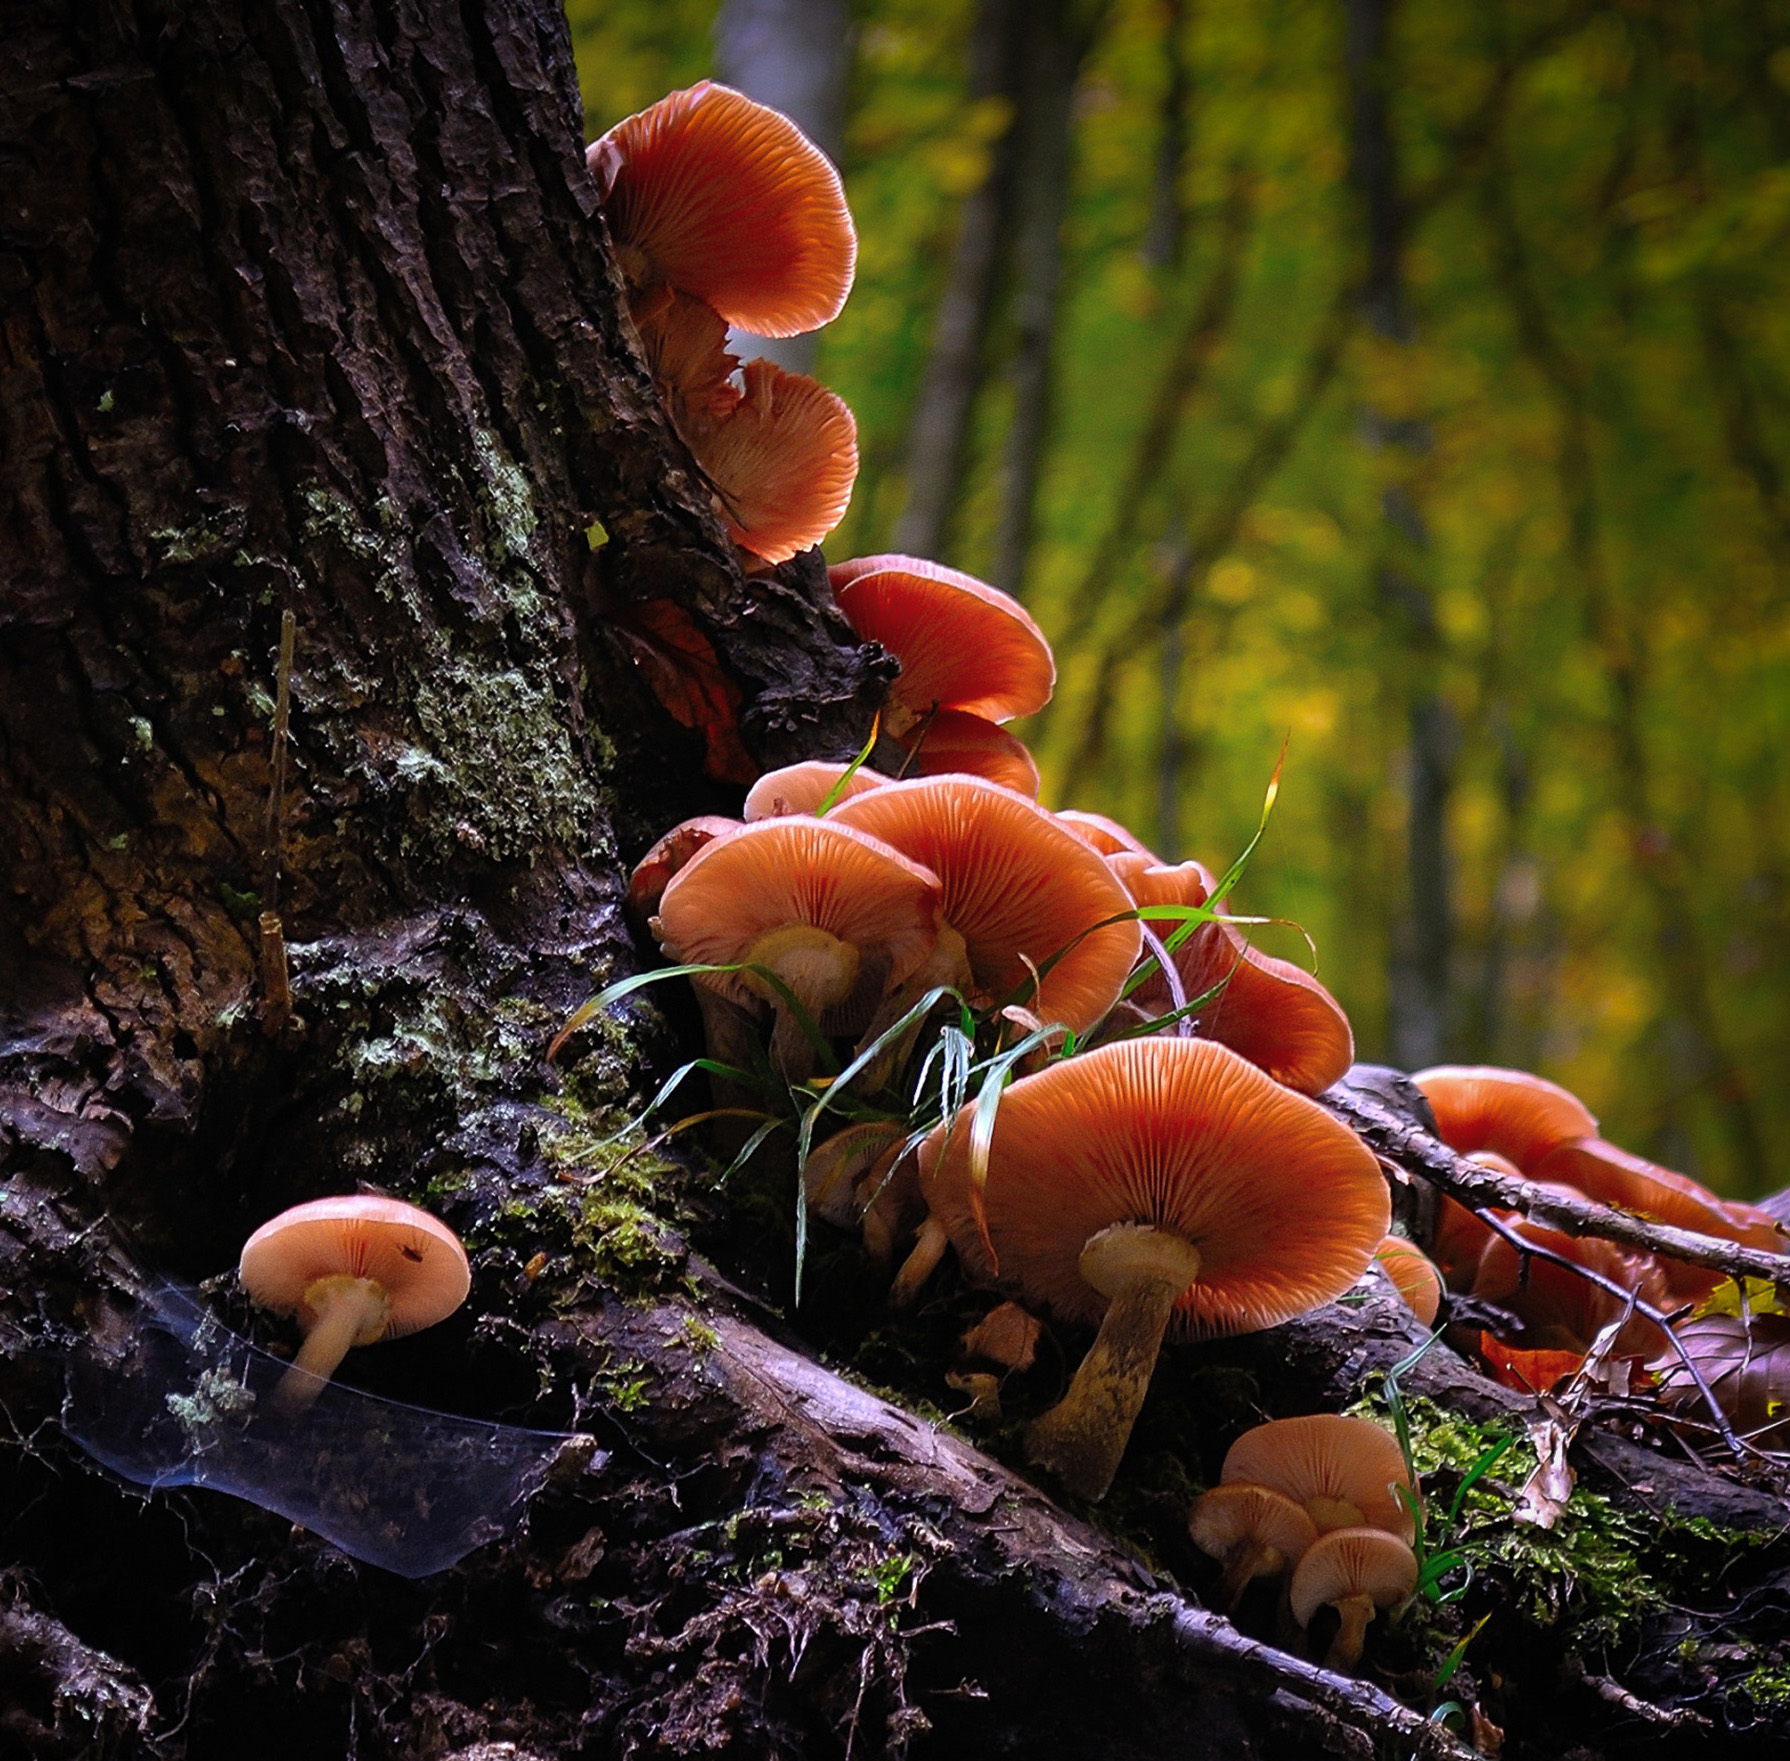 94 Fantastic Free Images for a Mushroom Wallpaper, Background or